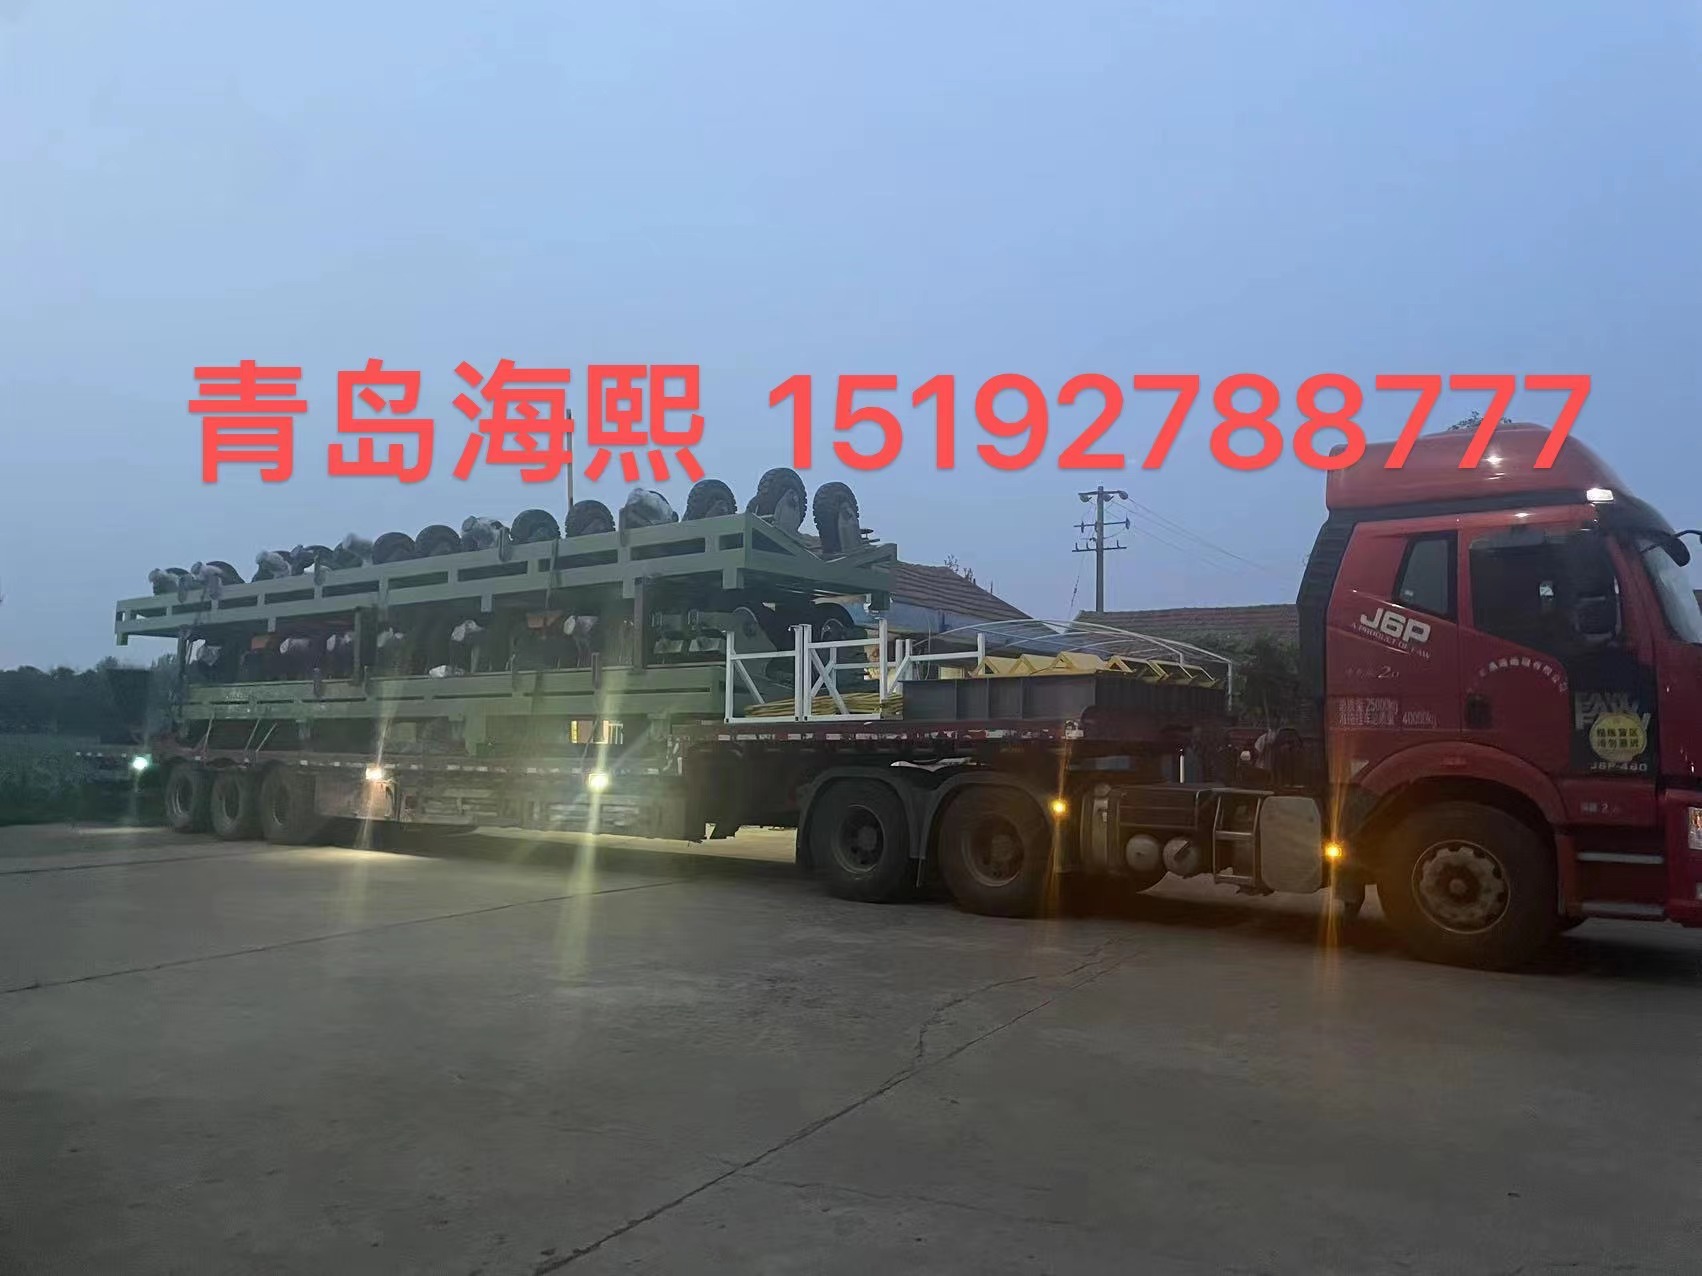 Hebei Huadun pipe manufacturing Co., Ltd. third ca